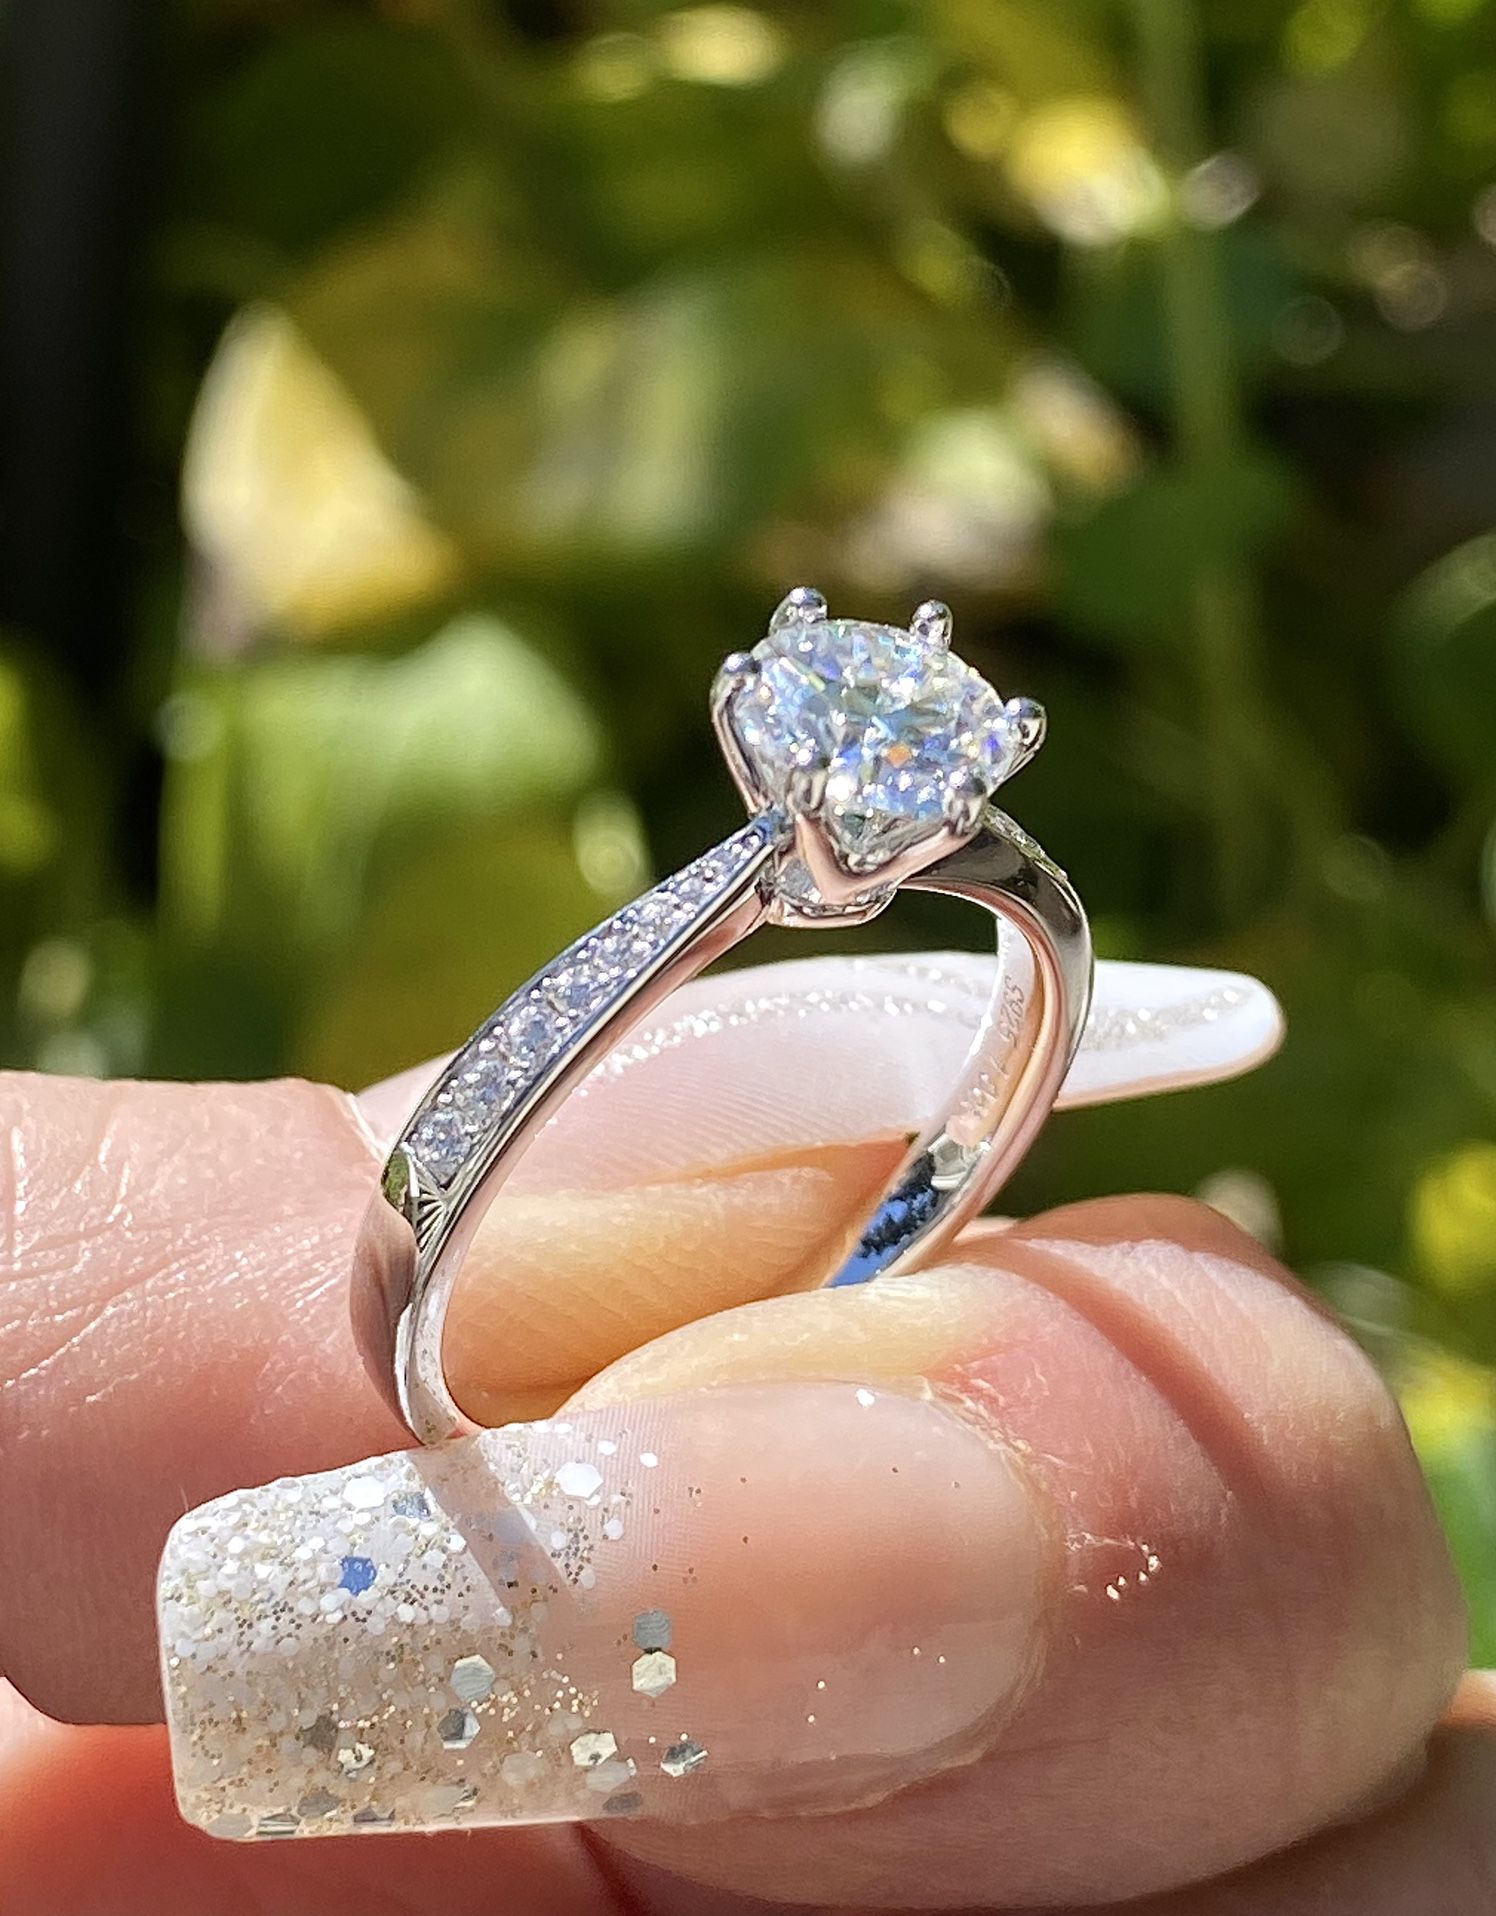 NEW! 1CTW. Round Brilliant Genuine Moissanite Diamond Engagement/ Promise Ring, Please See Details 🌹